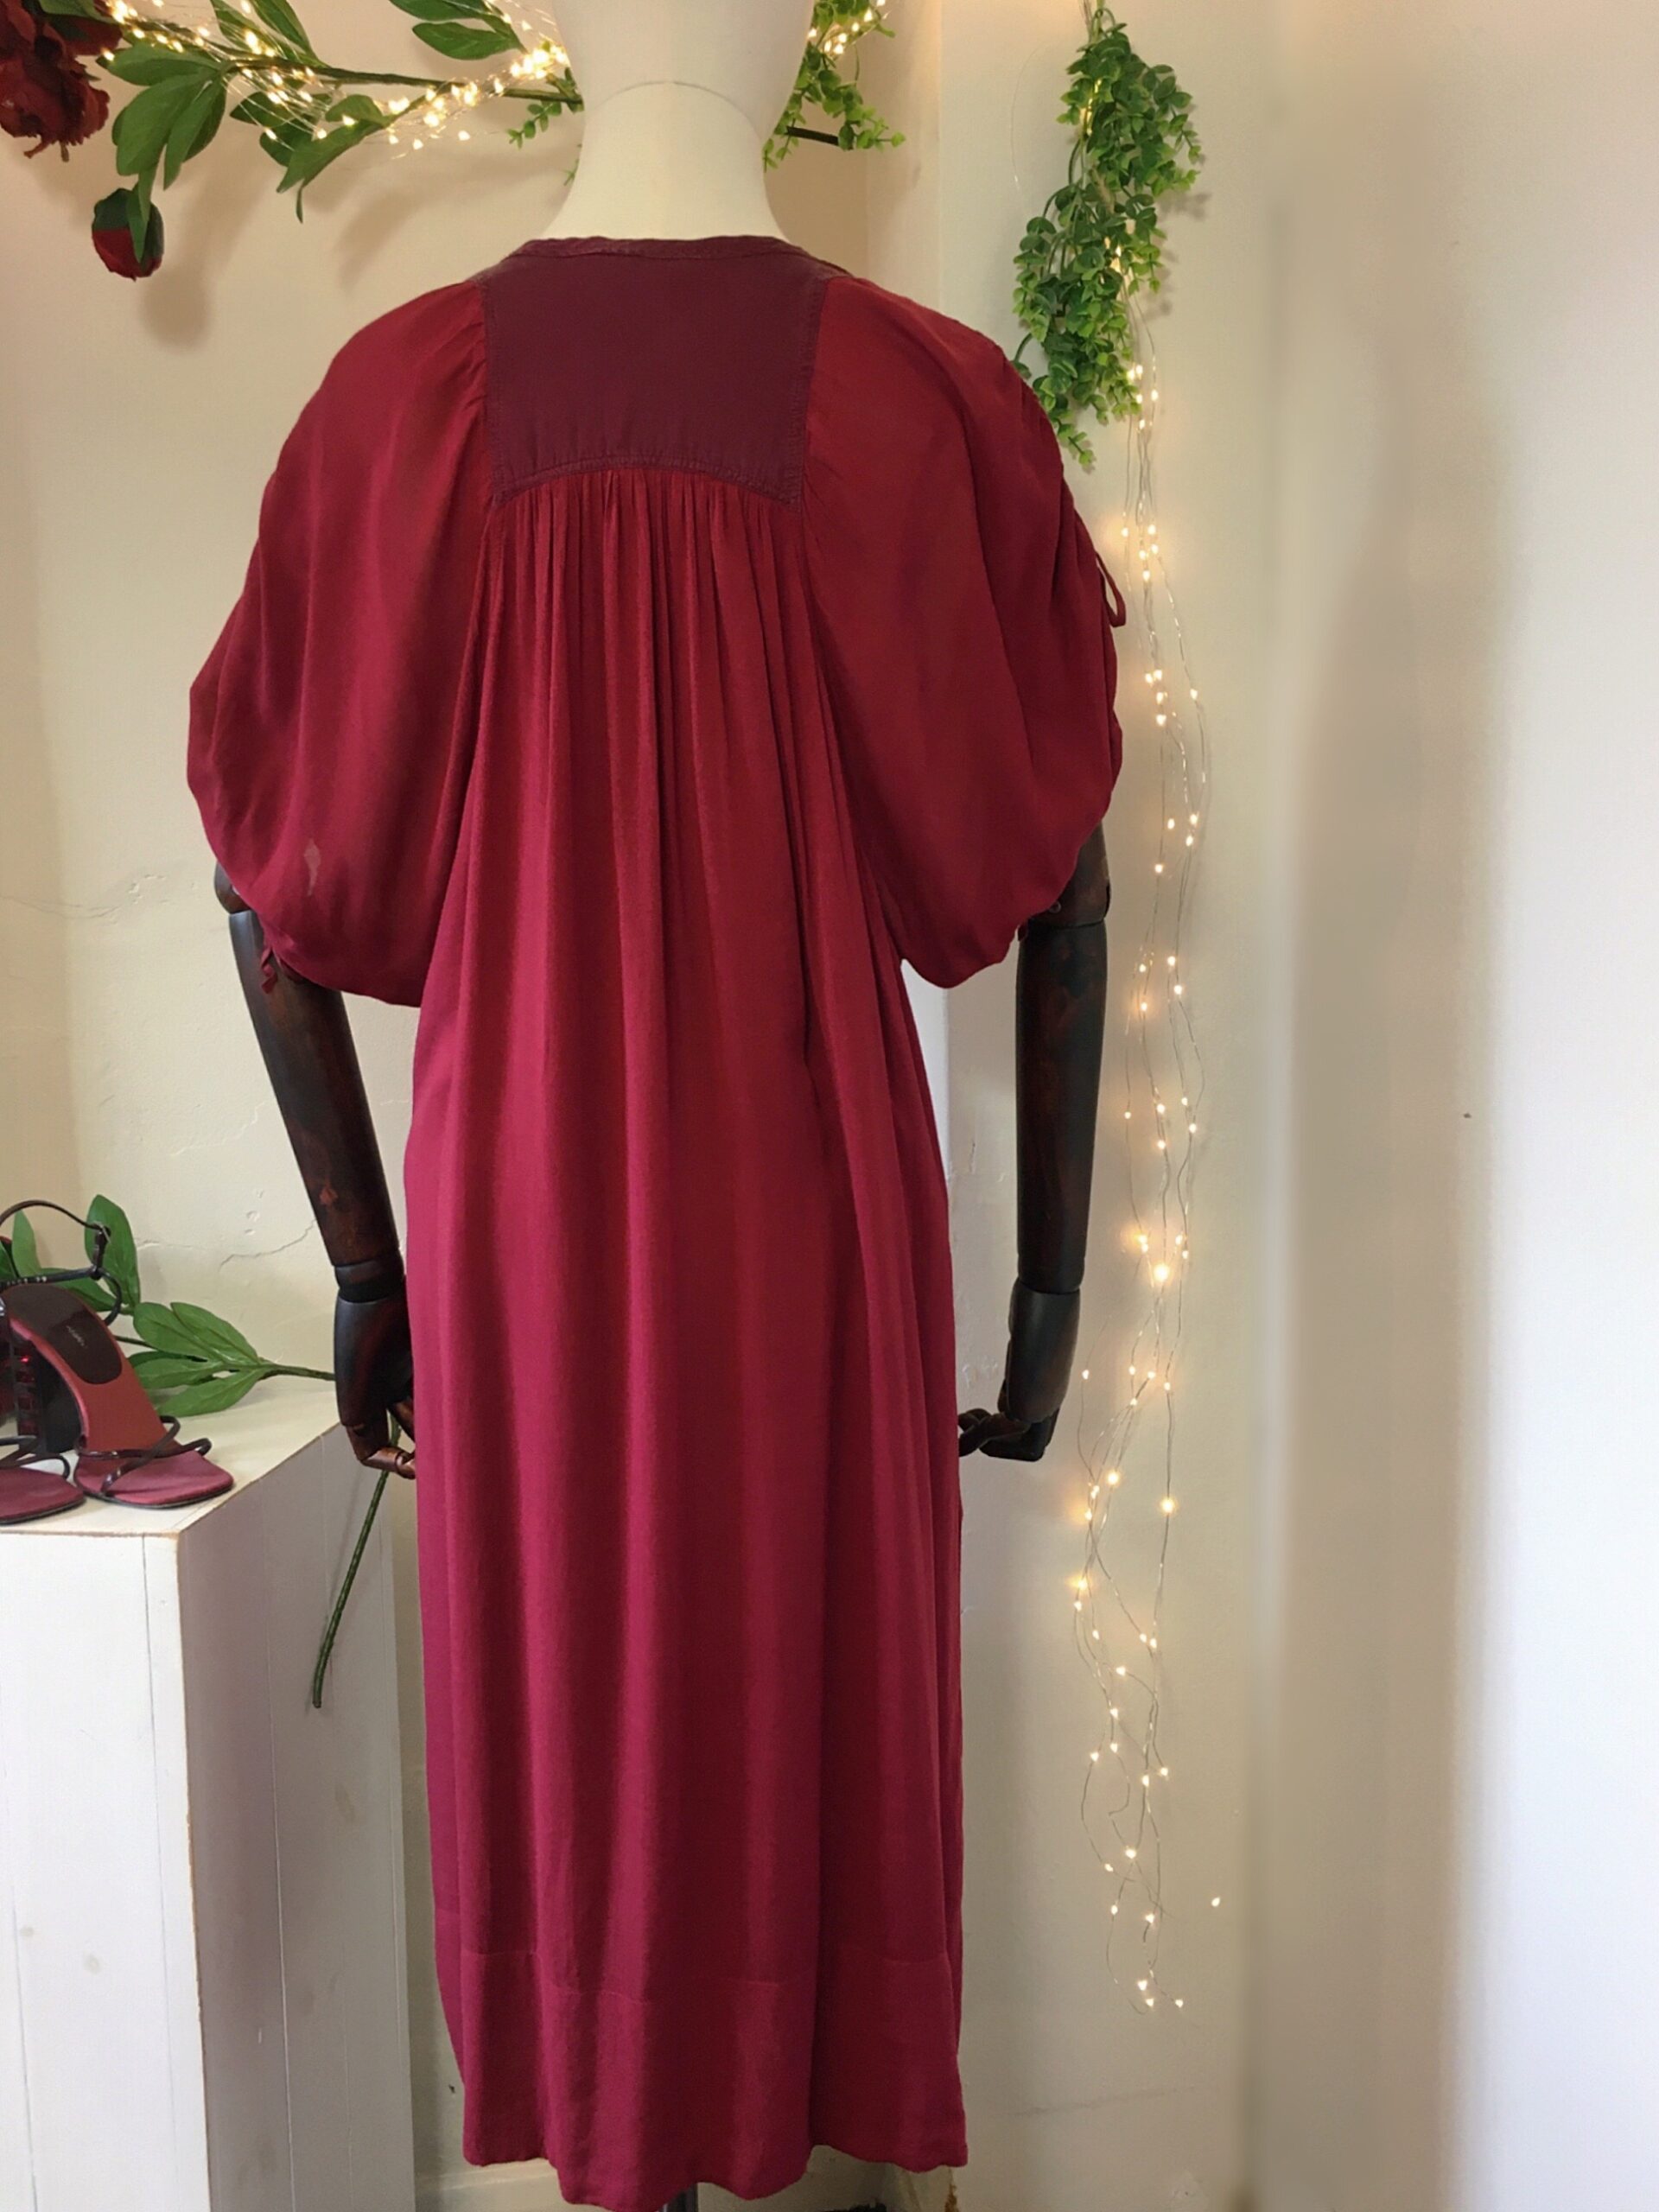 Isabel Marant dress | Flutterby's Boutique